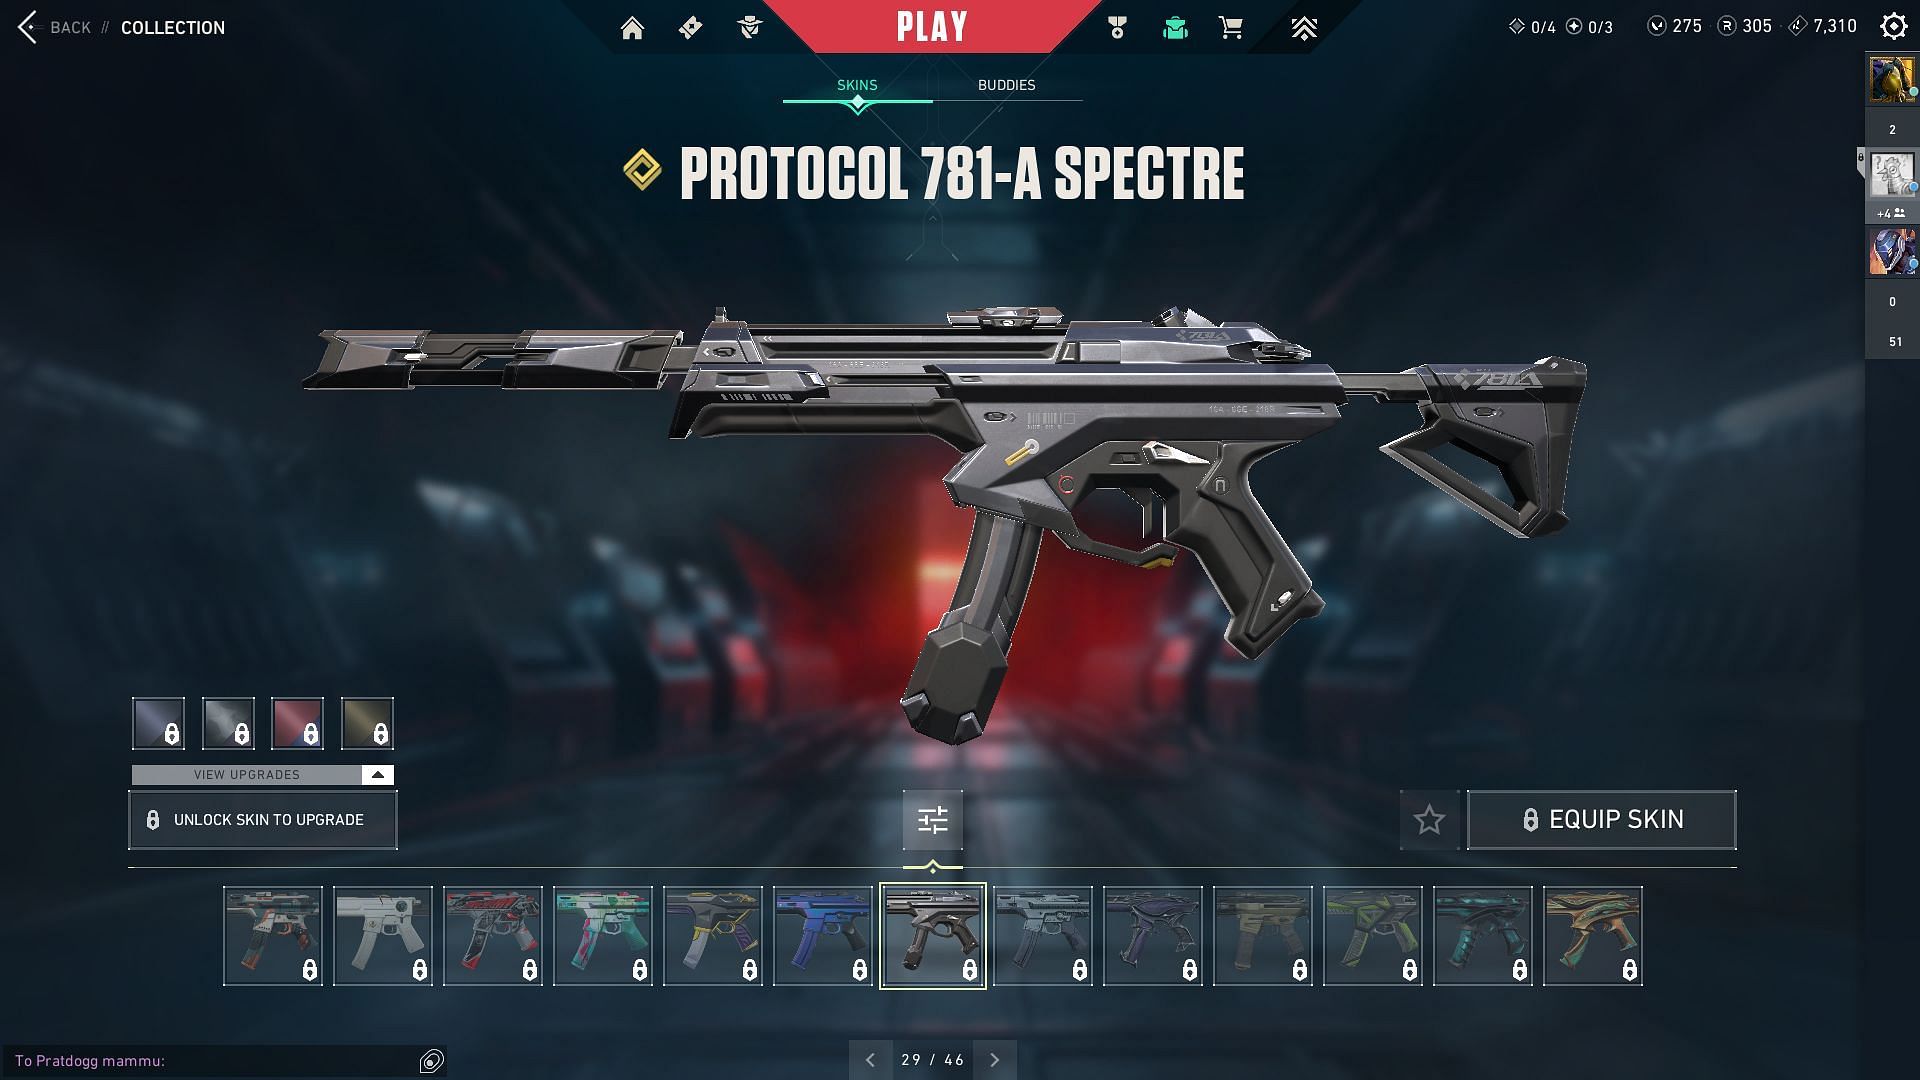 Protocol 781-A Spectre (Image via Sportskeeda and Riot Games)